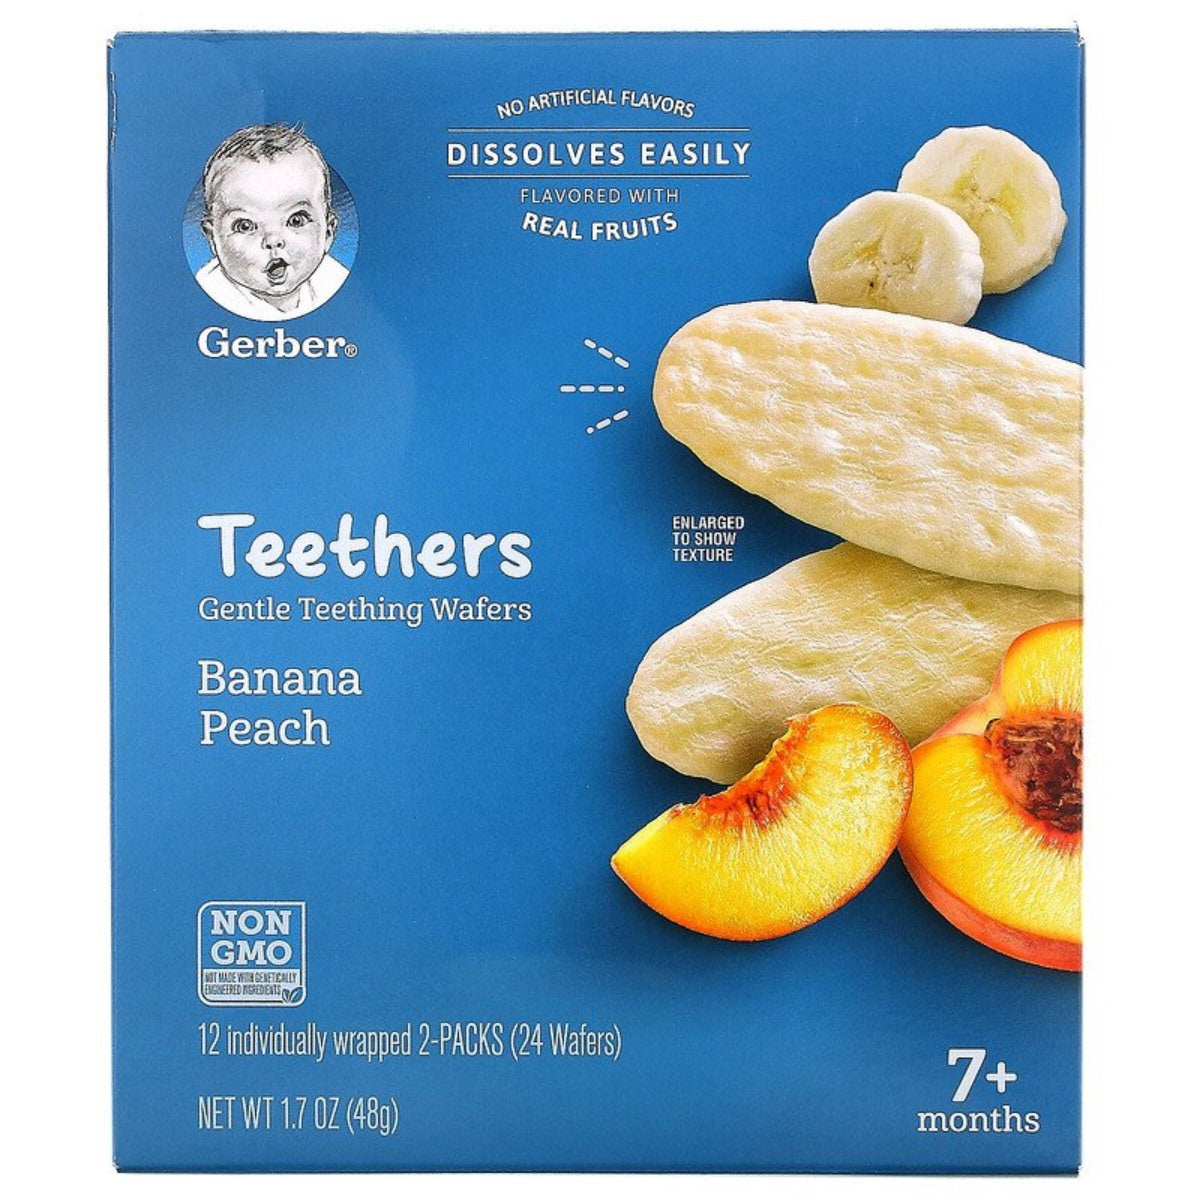 Gerber Snacks for Baby, Teethers Gentle Teething Wafers, Banana and Peach